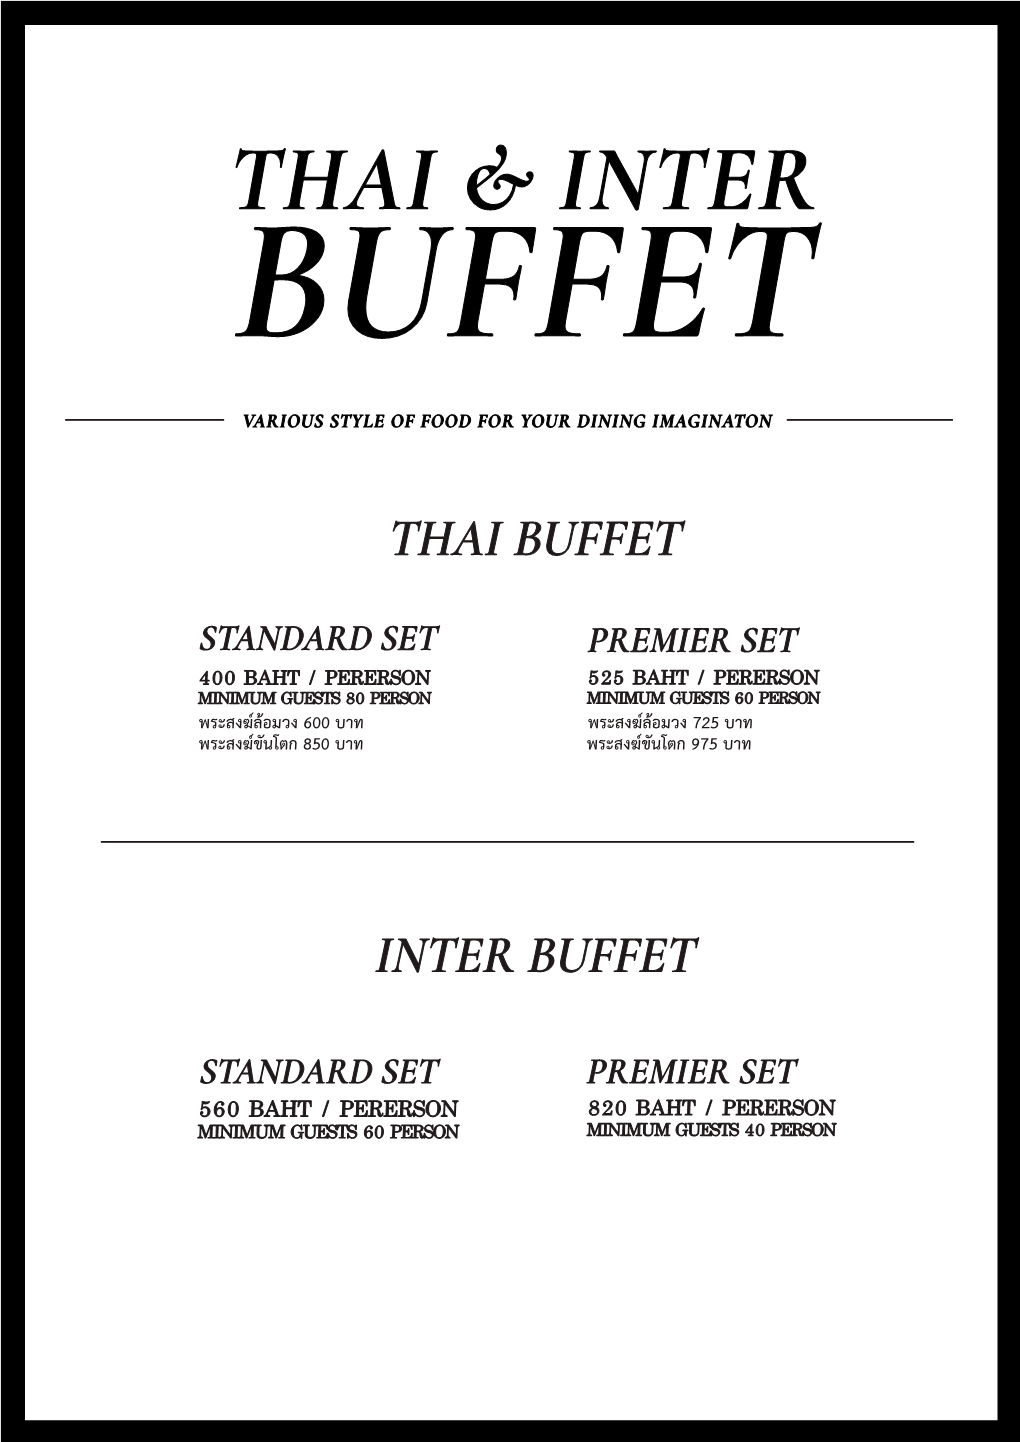 Thai and Inter Buffet 2018